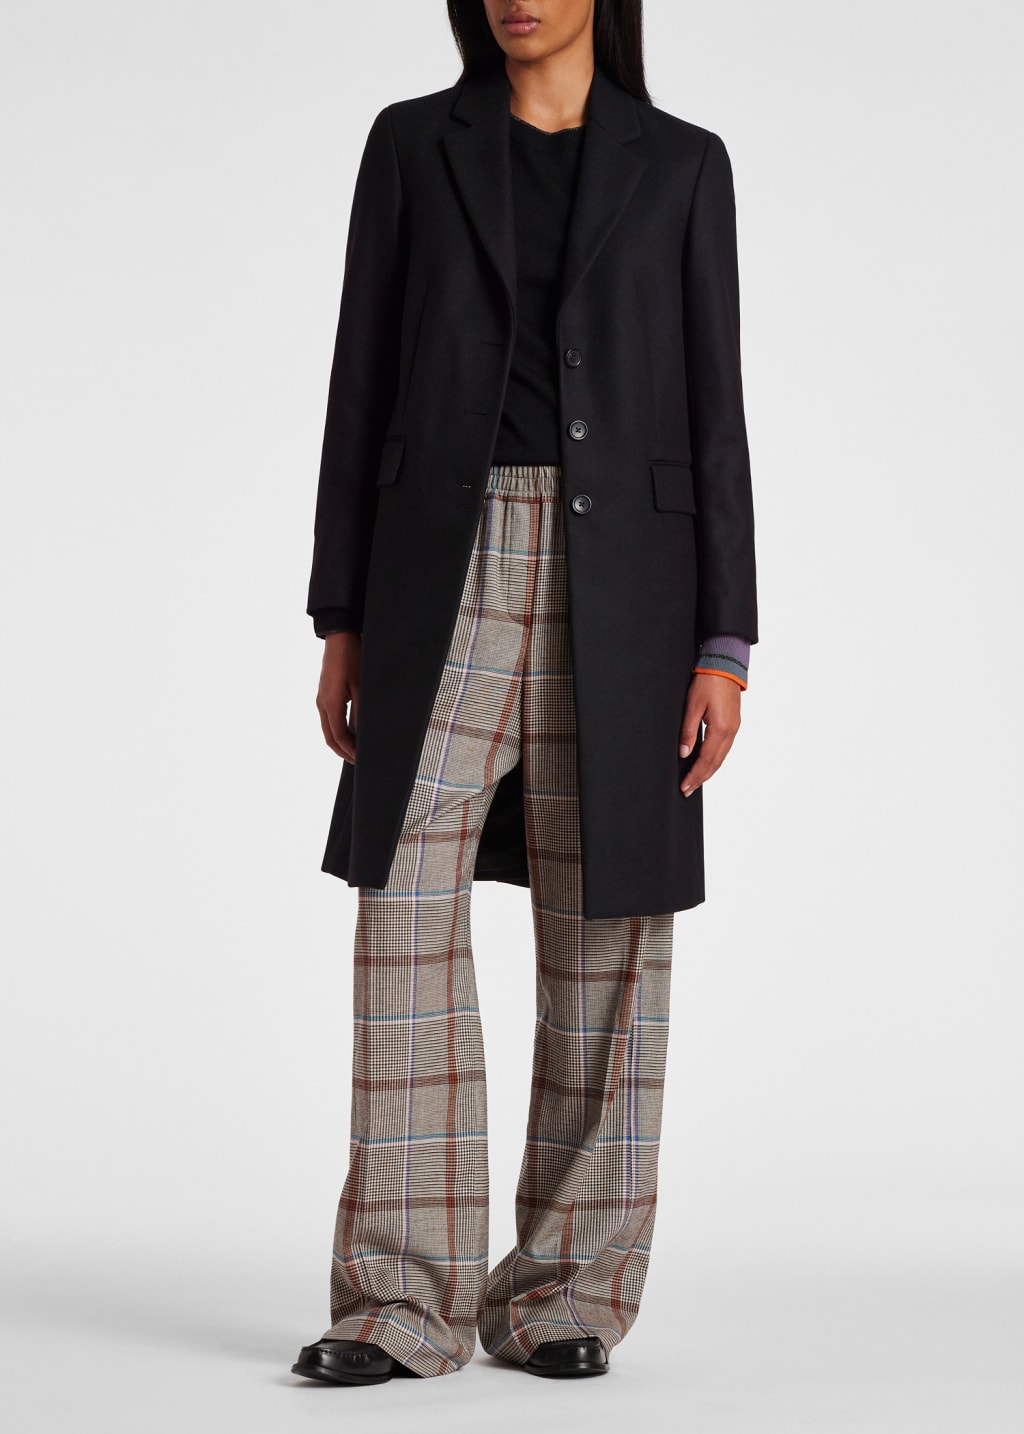 Model View - Women's Black Cashmere-Blend Epsom Coat Paul Smith